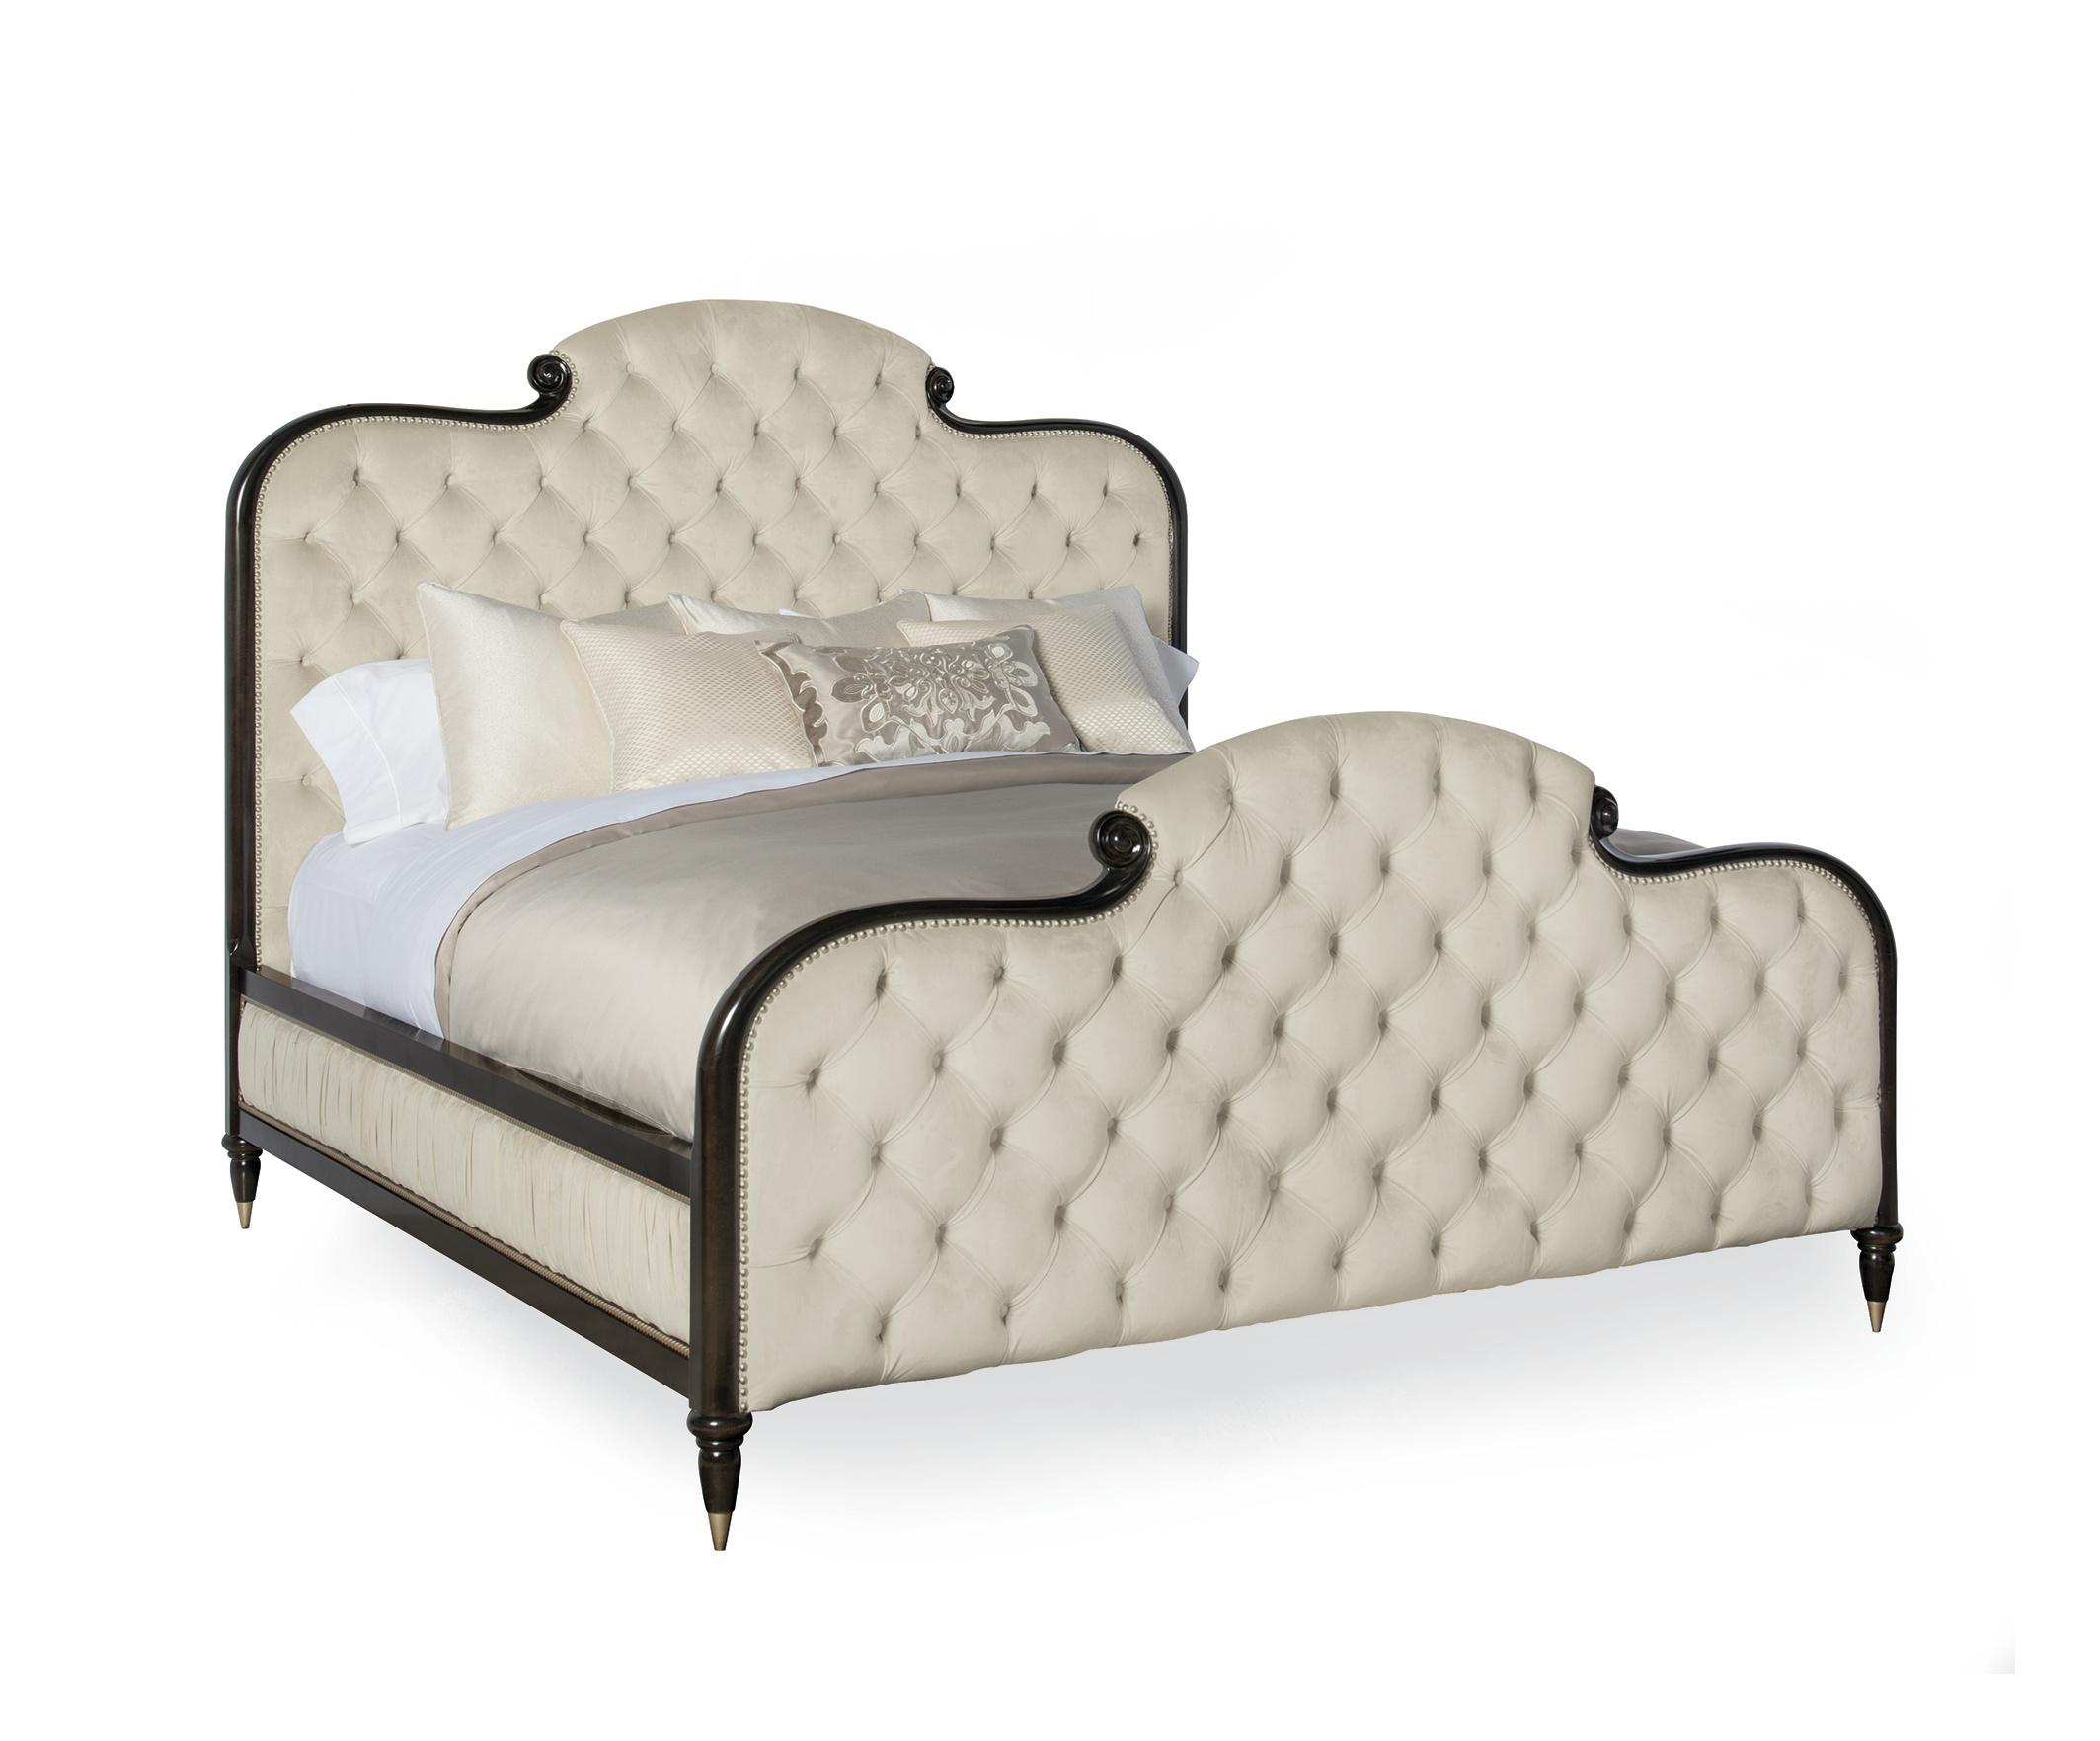 Contemporary Platform Bed EVERLY B093-302 in Cream, Ebony Fabric